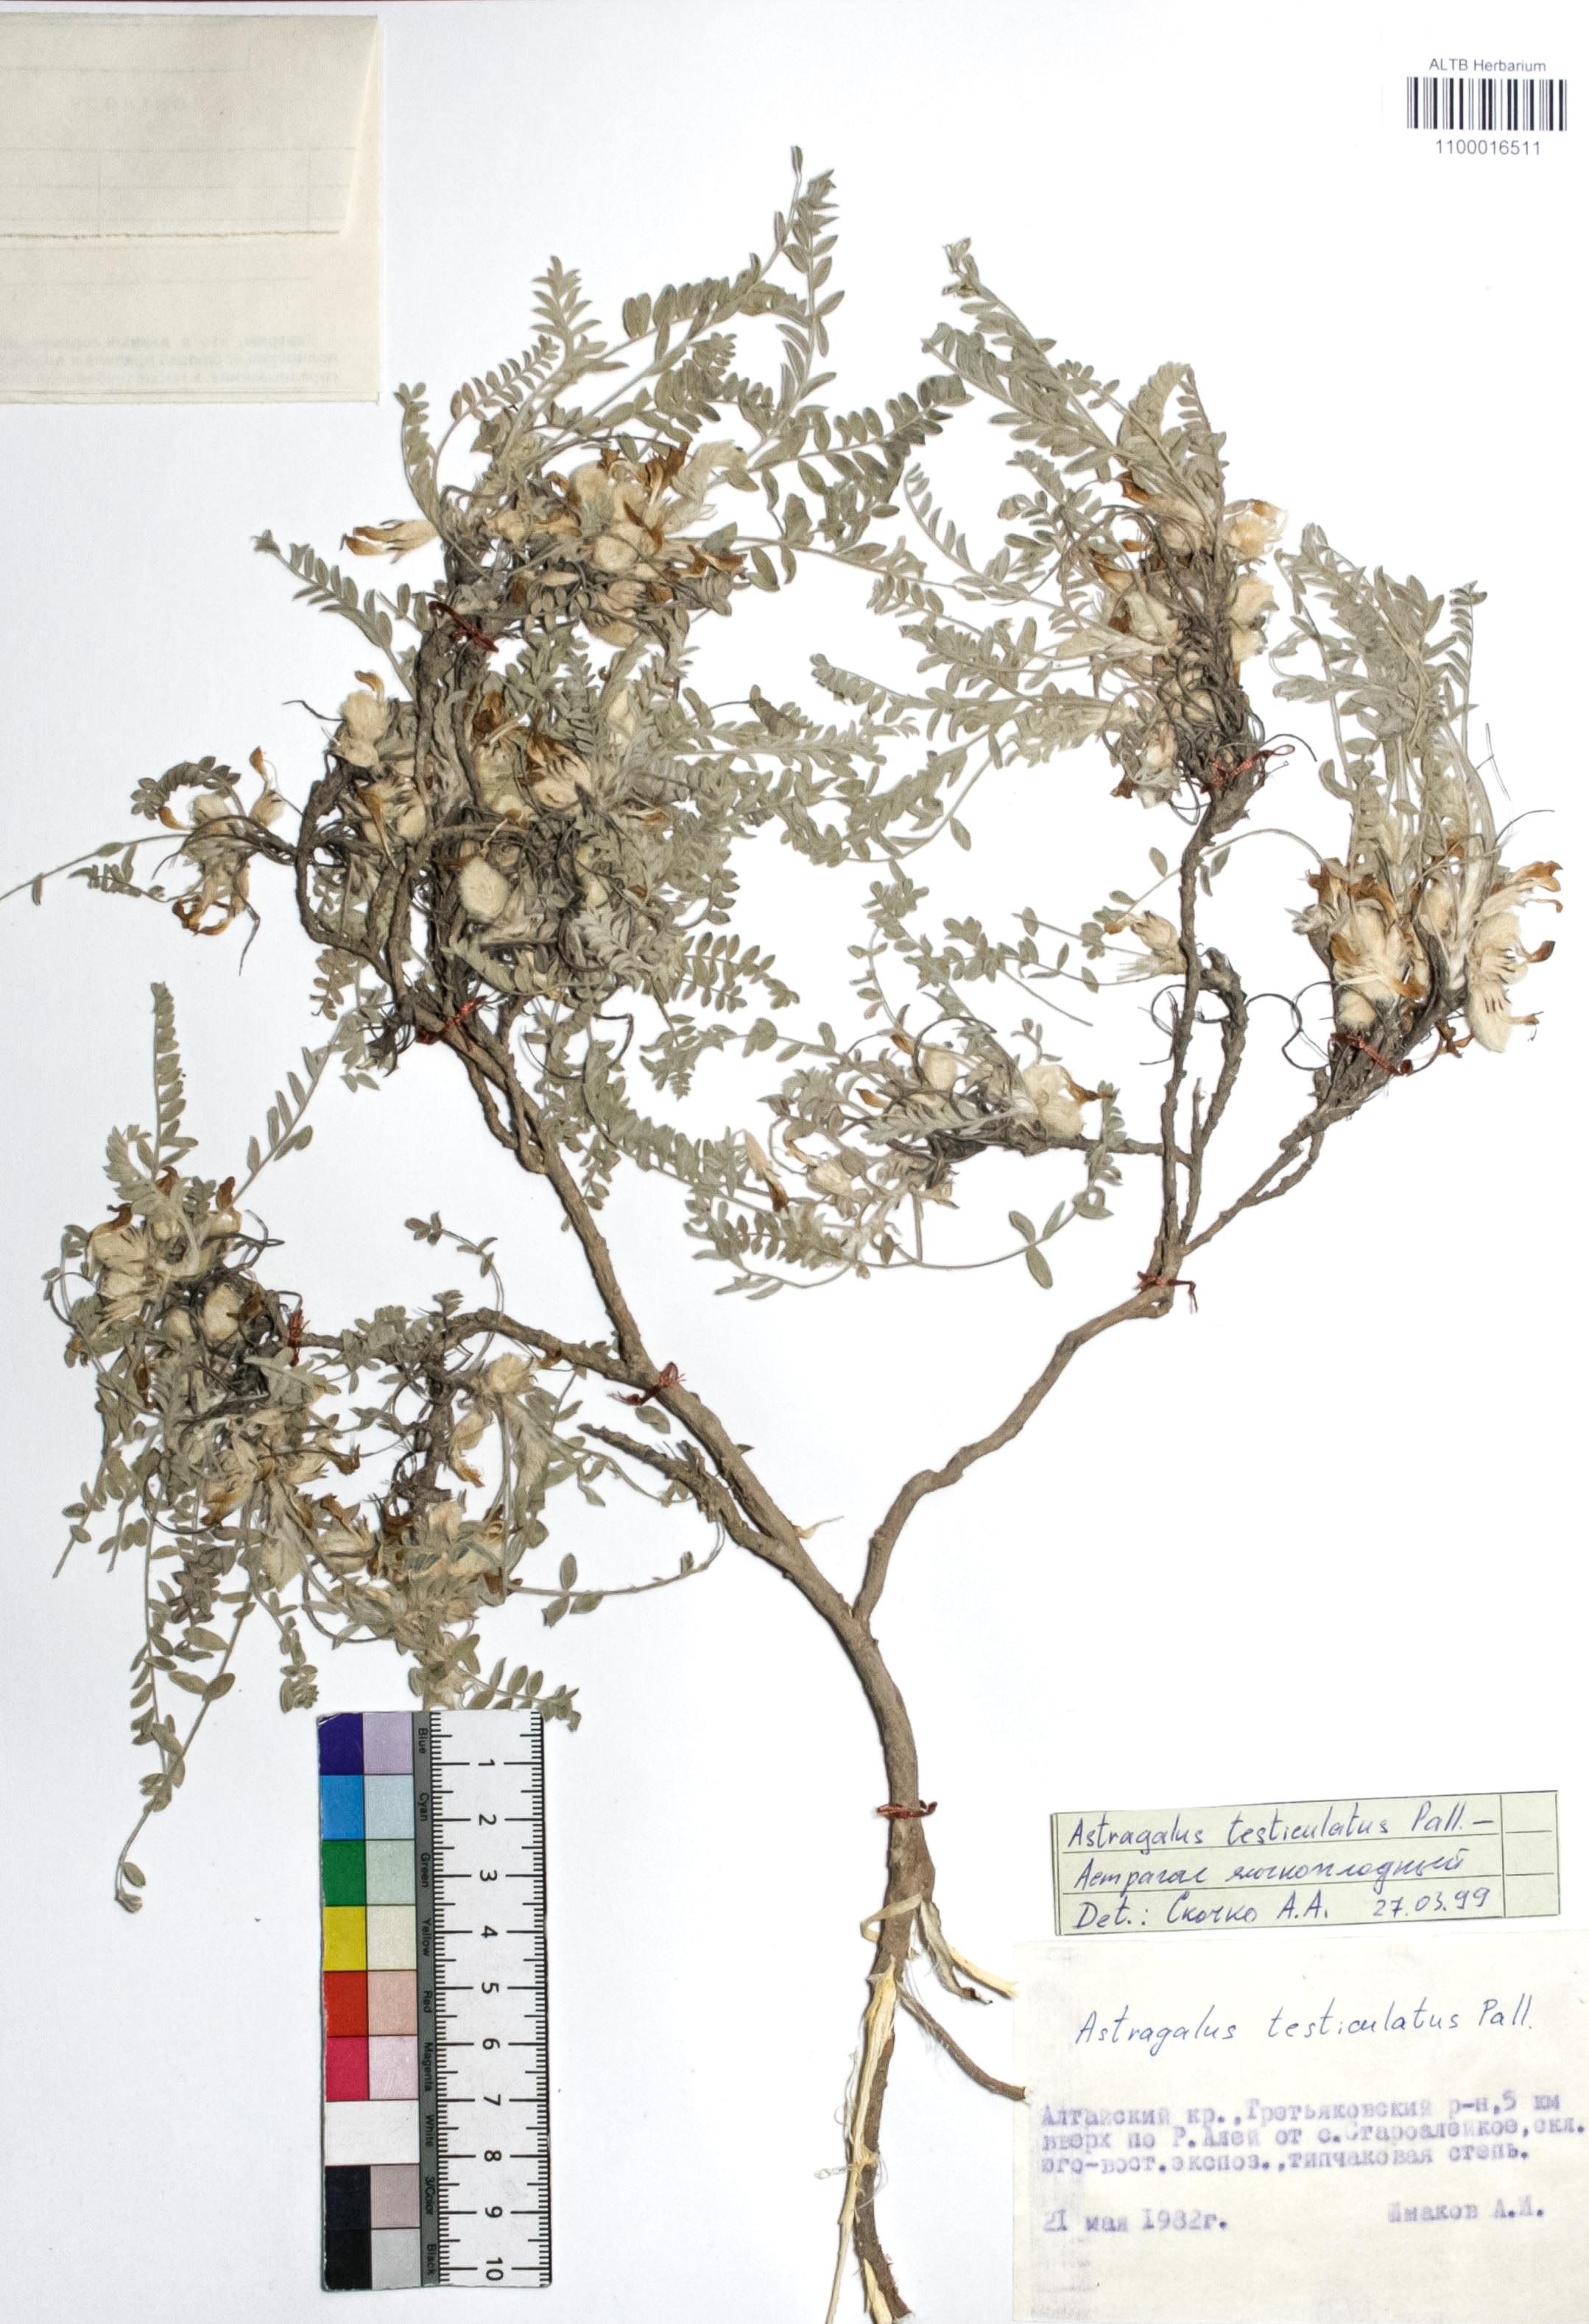 Astragalus testiculatus Pall. 